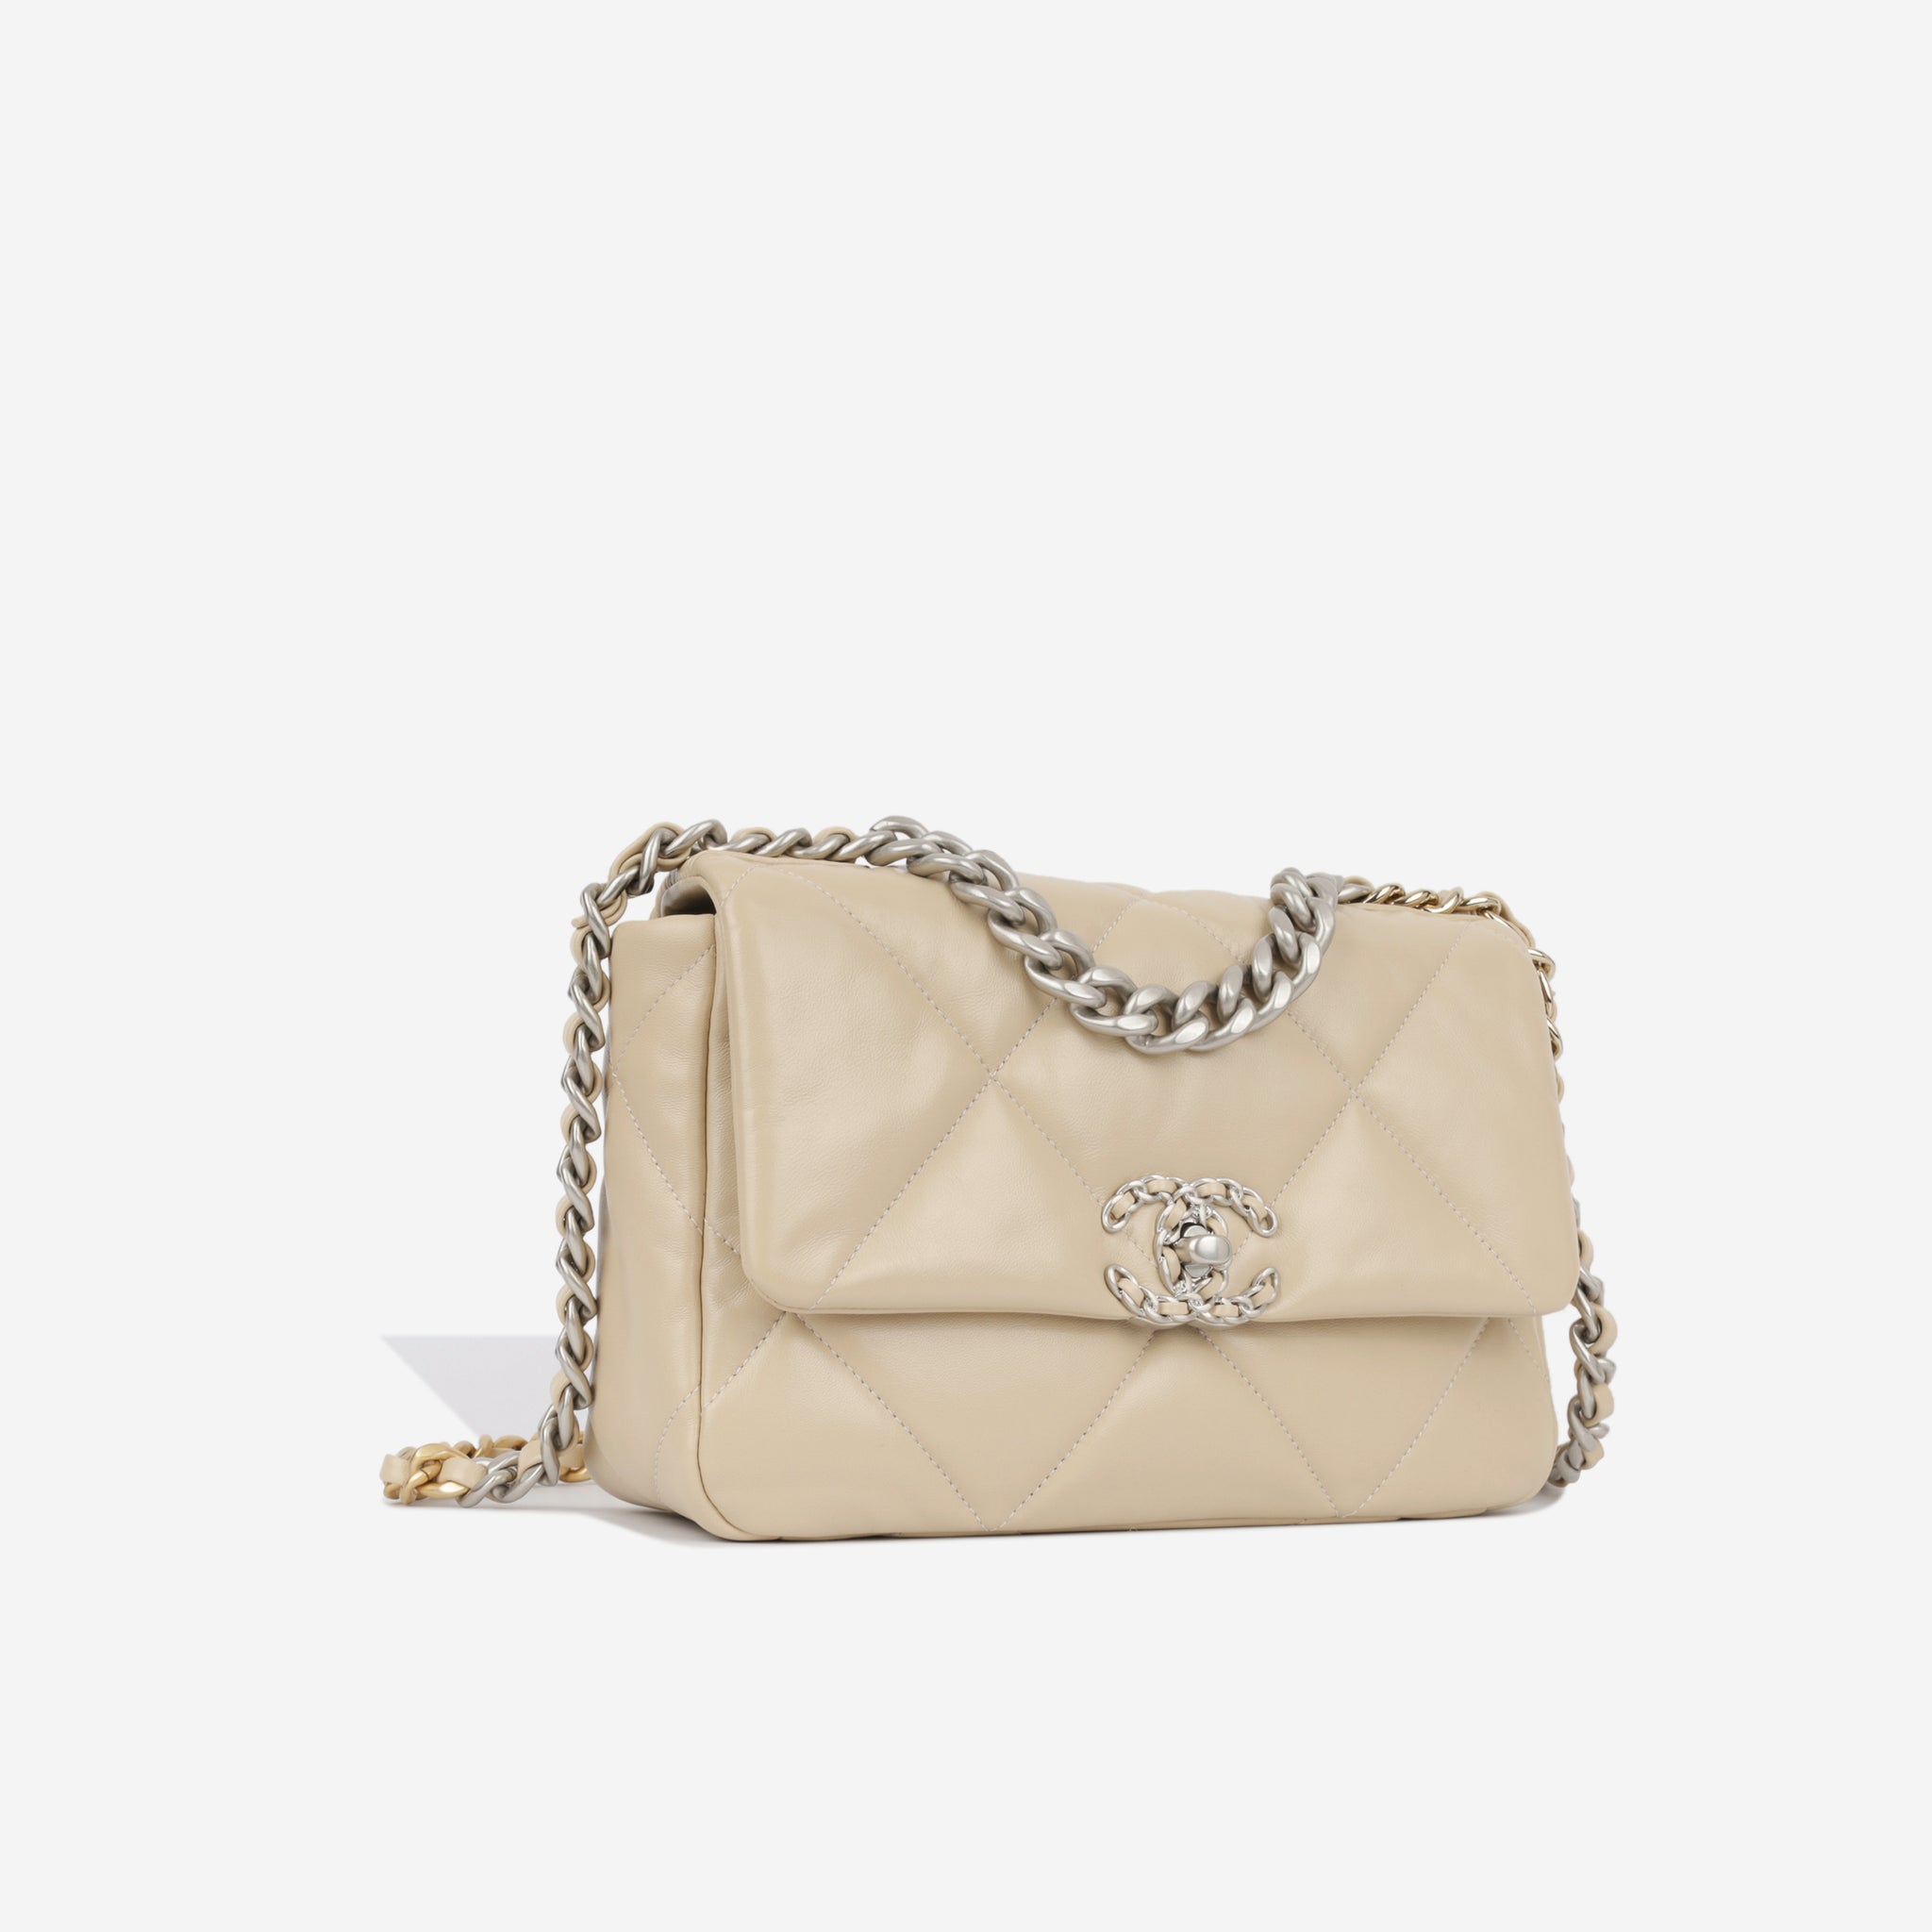 Chanel - Chanel 19 Flap Bag - Small - Beige Goatskin - SHW - Immaculate |  Bagista